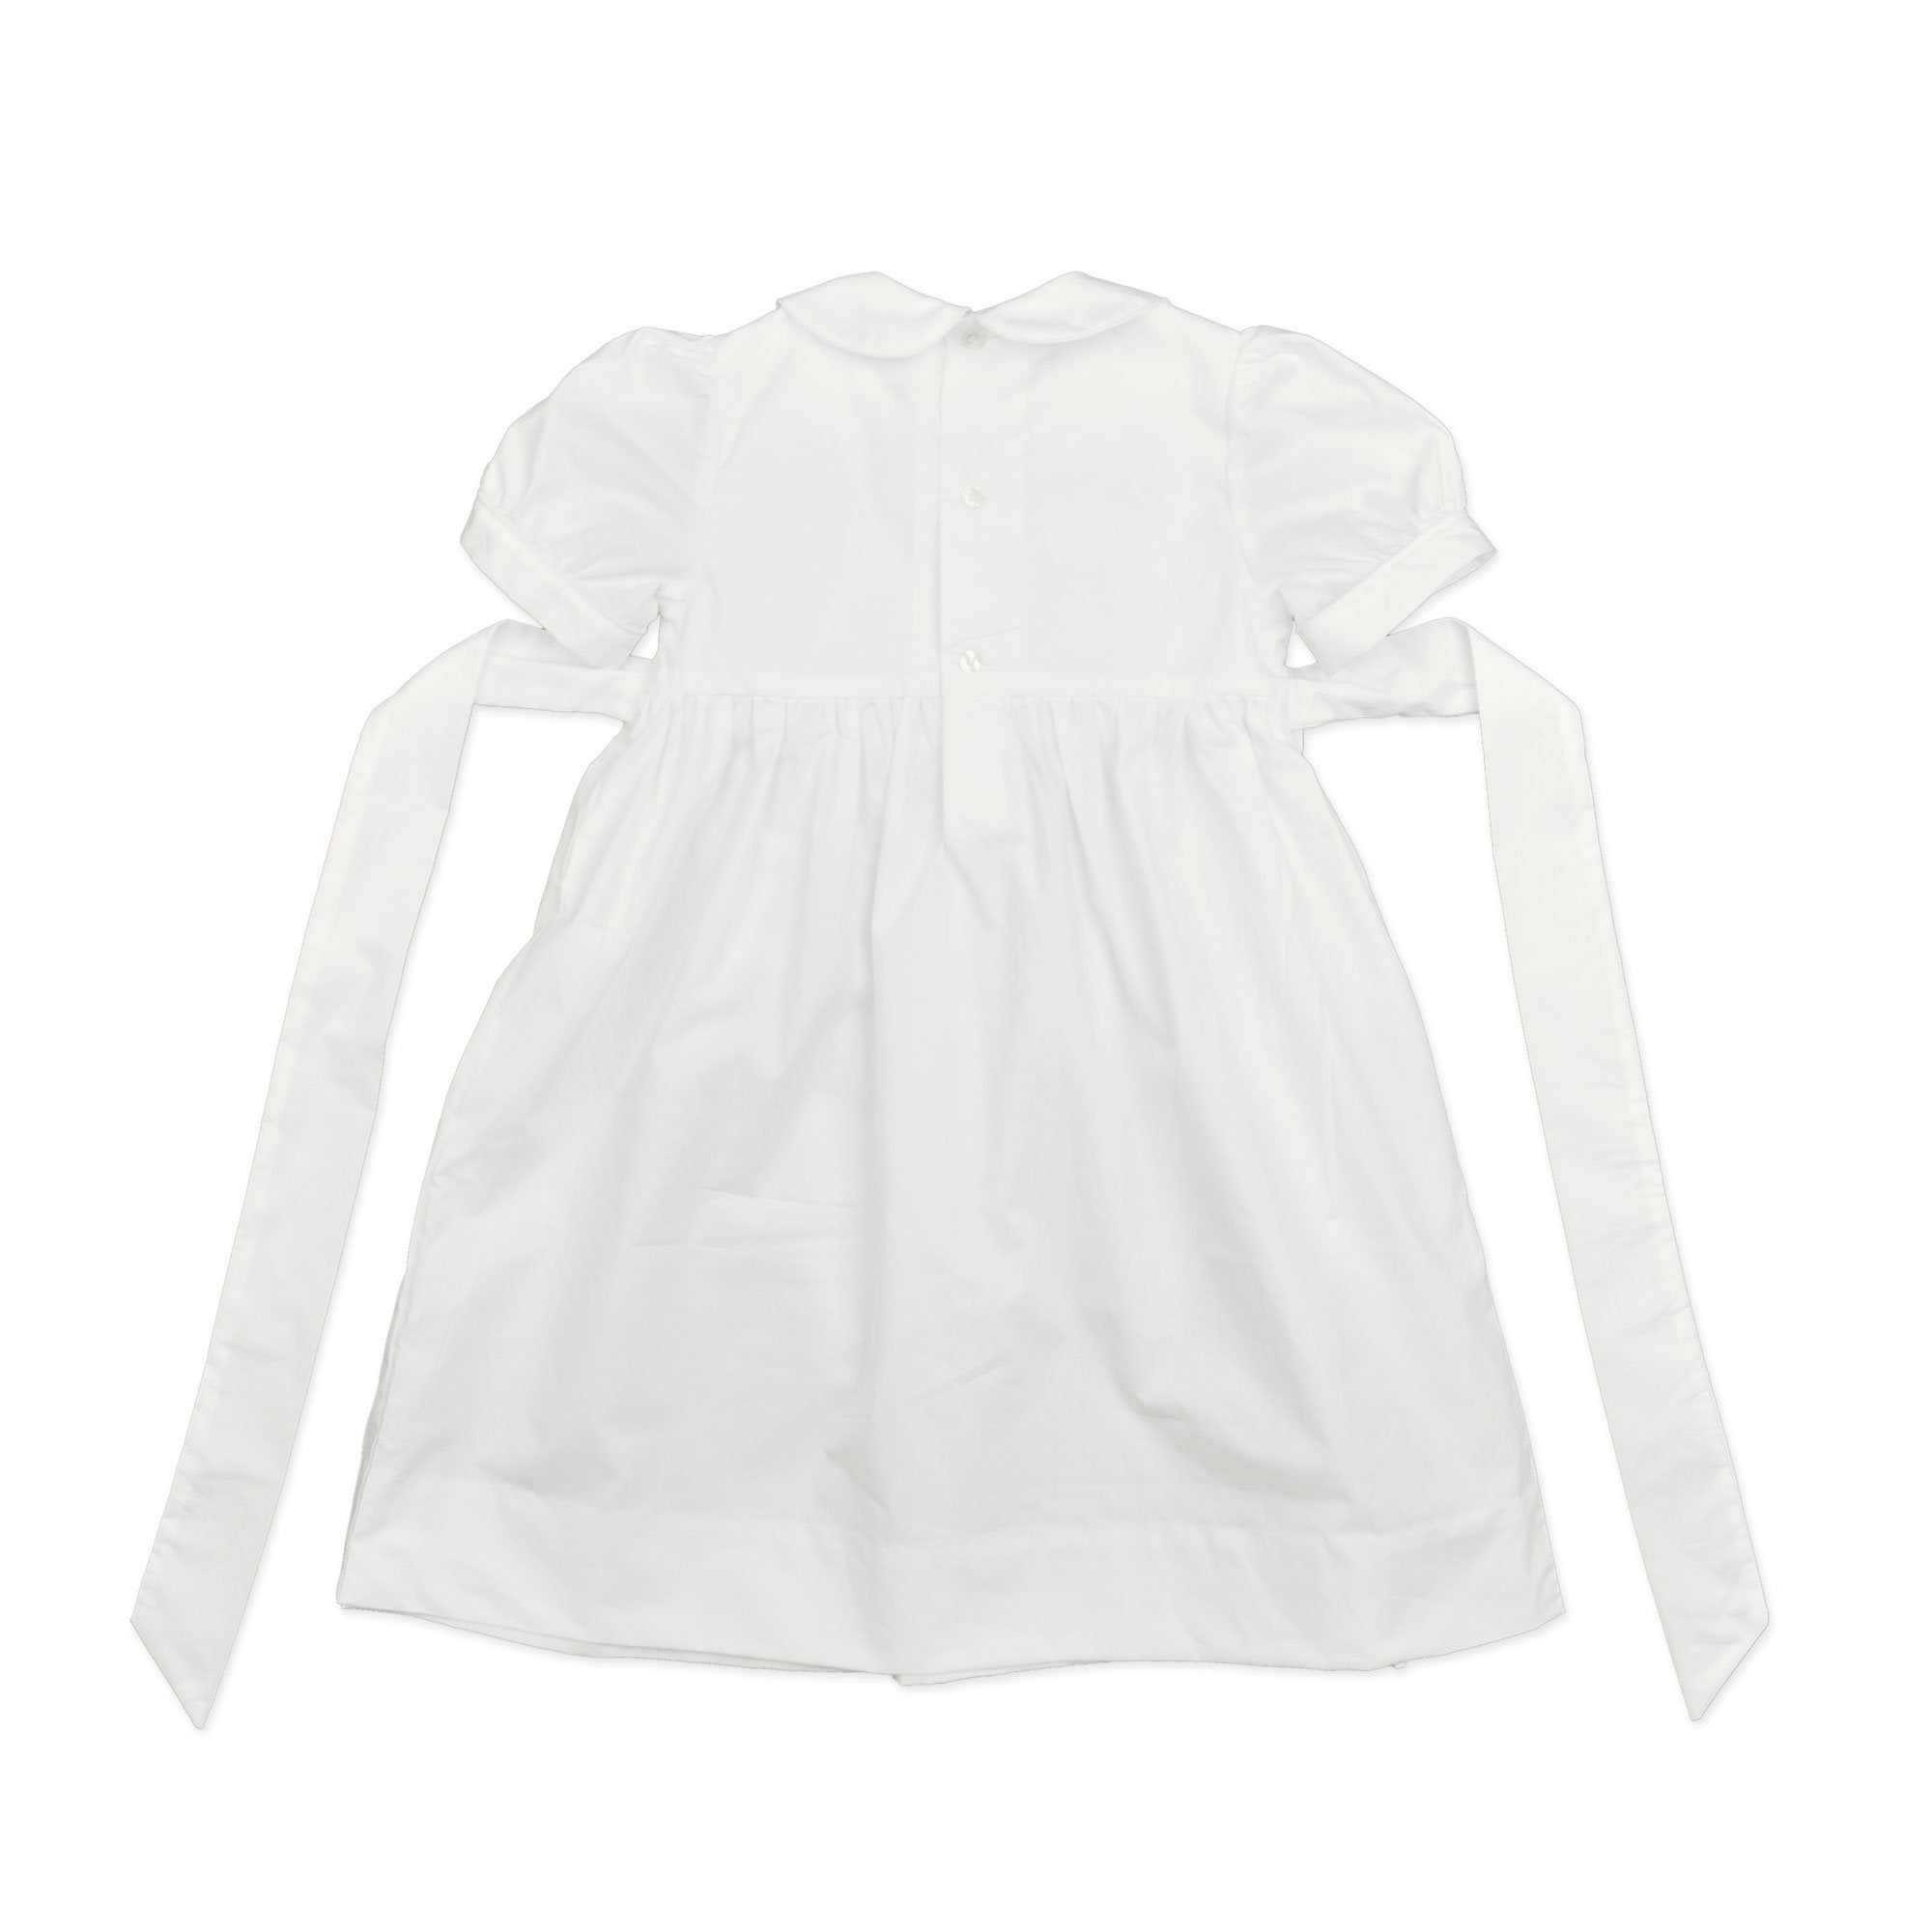 Bella Cap Sleeve White Smock Dress - Cou Cou Baby